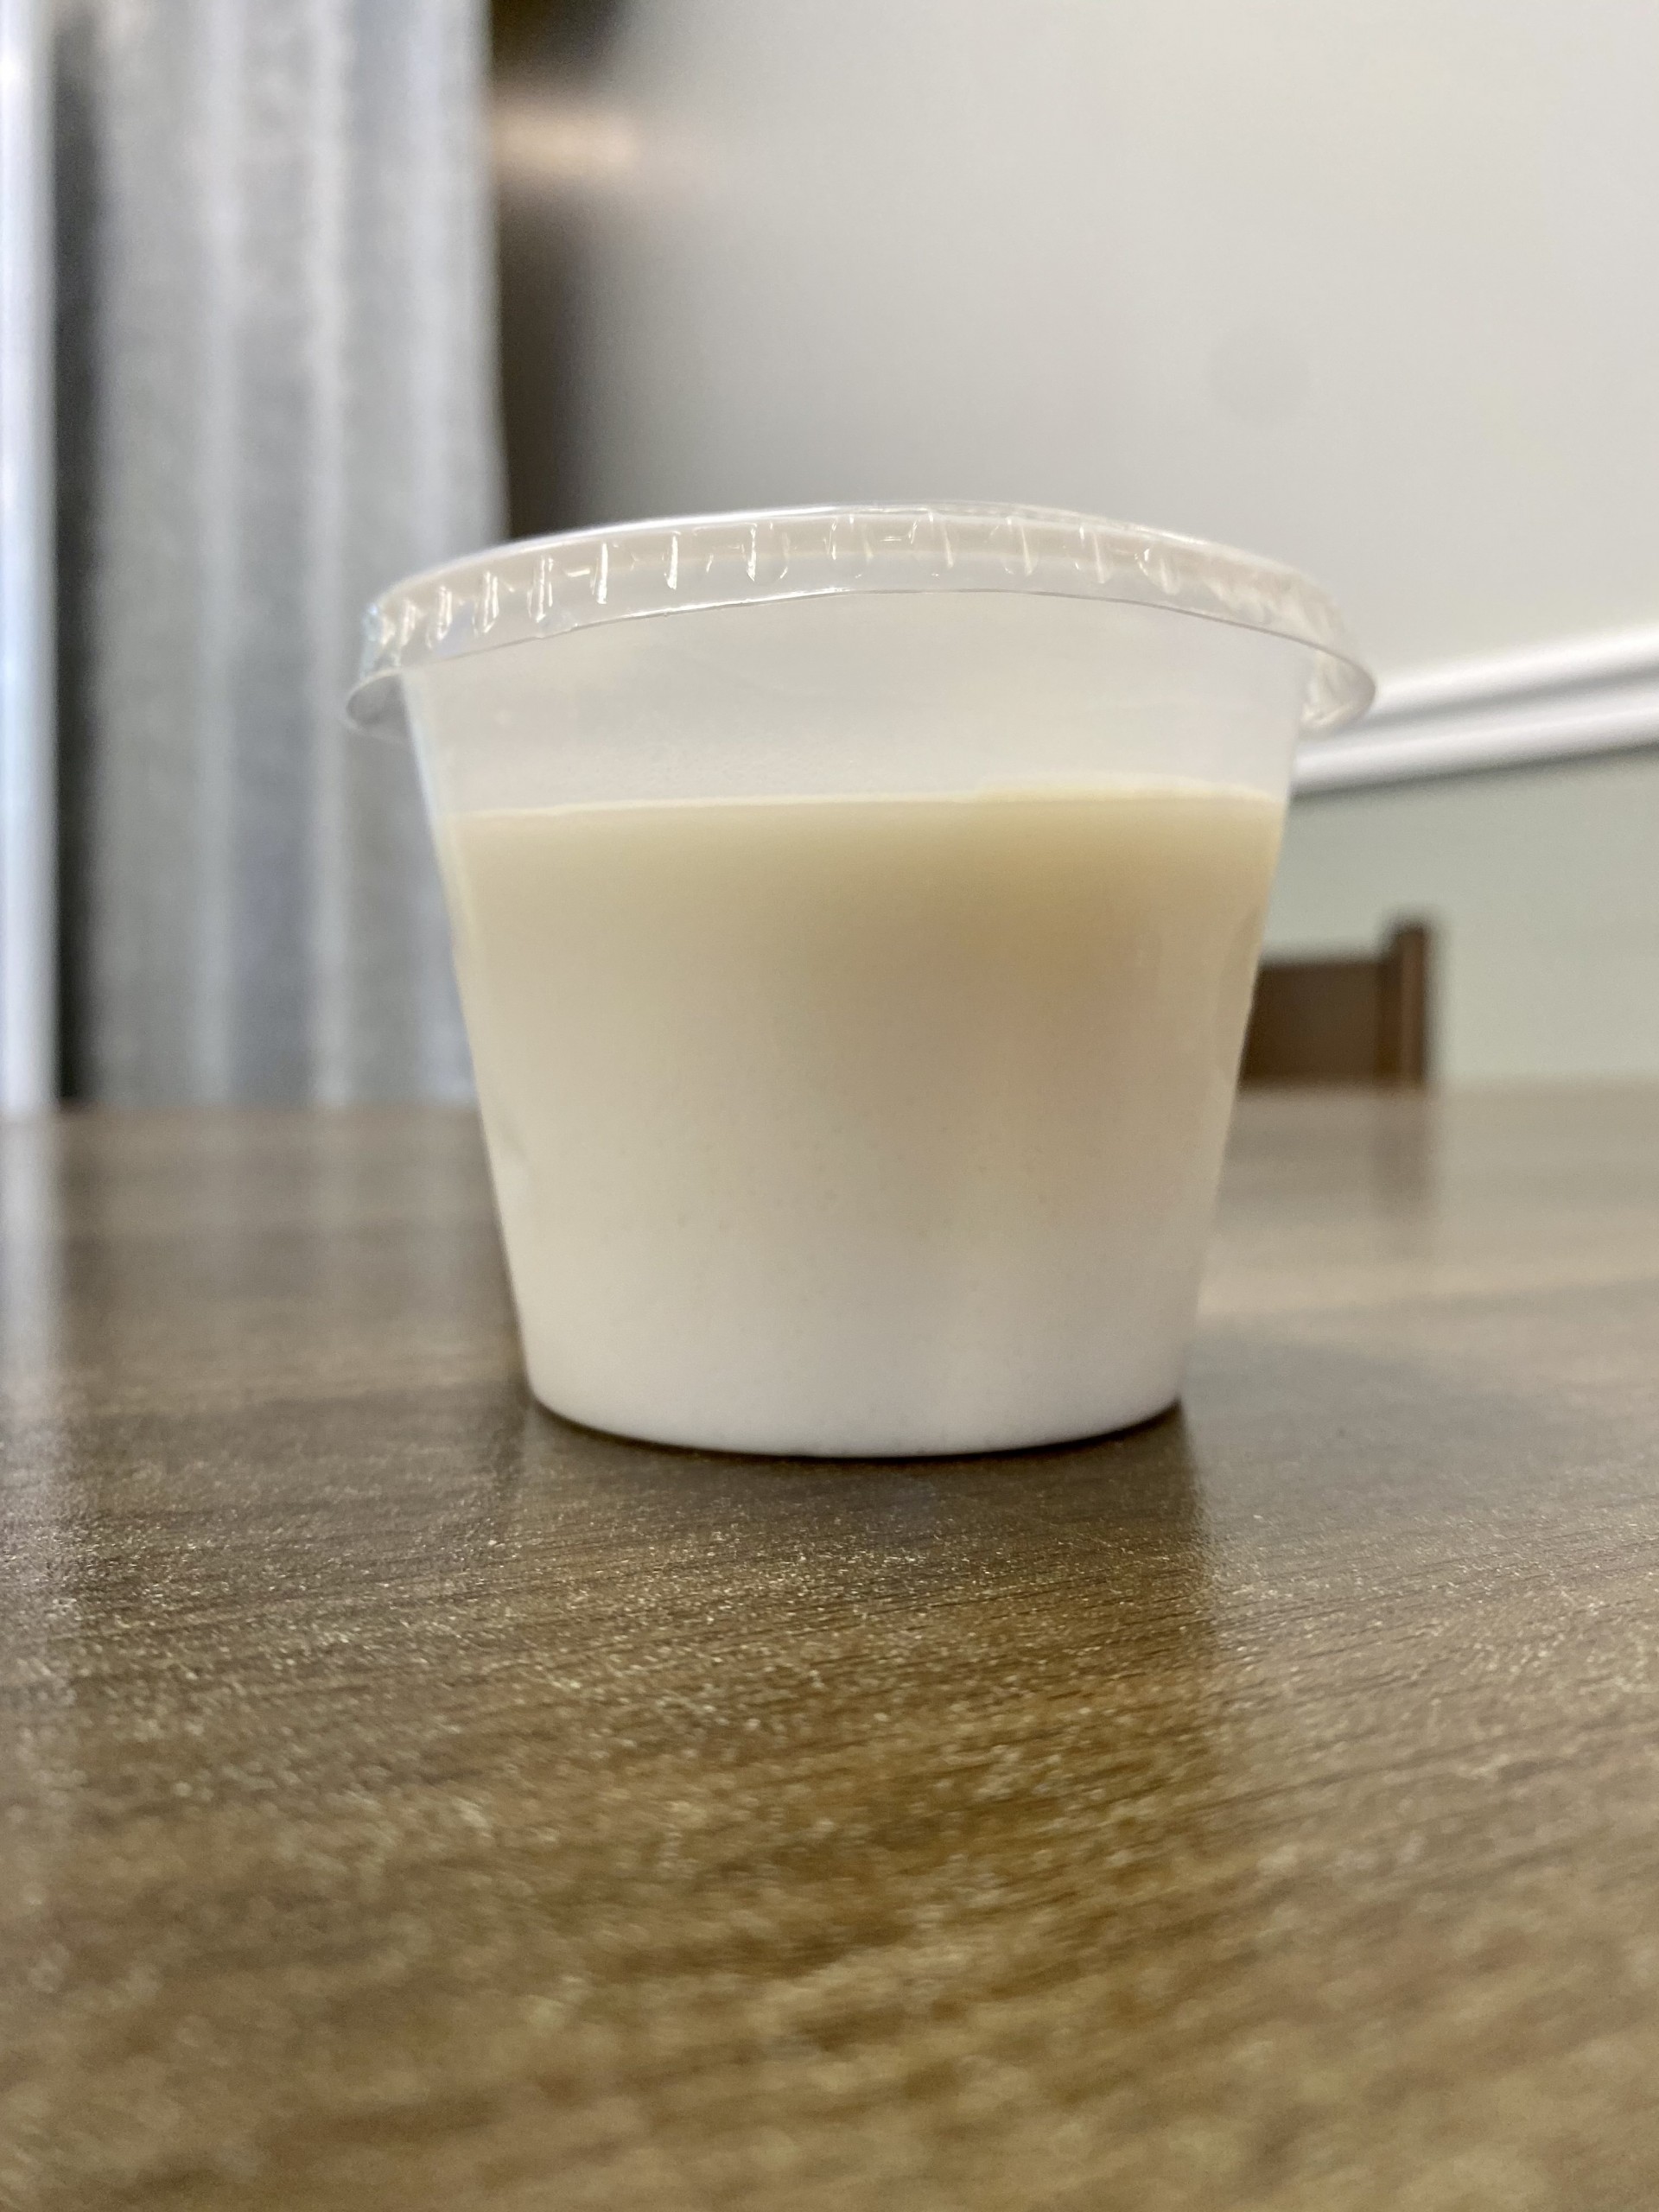 Sữa chua ( Vietnamese yogurt)